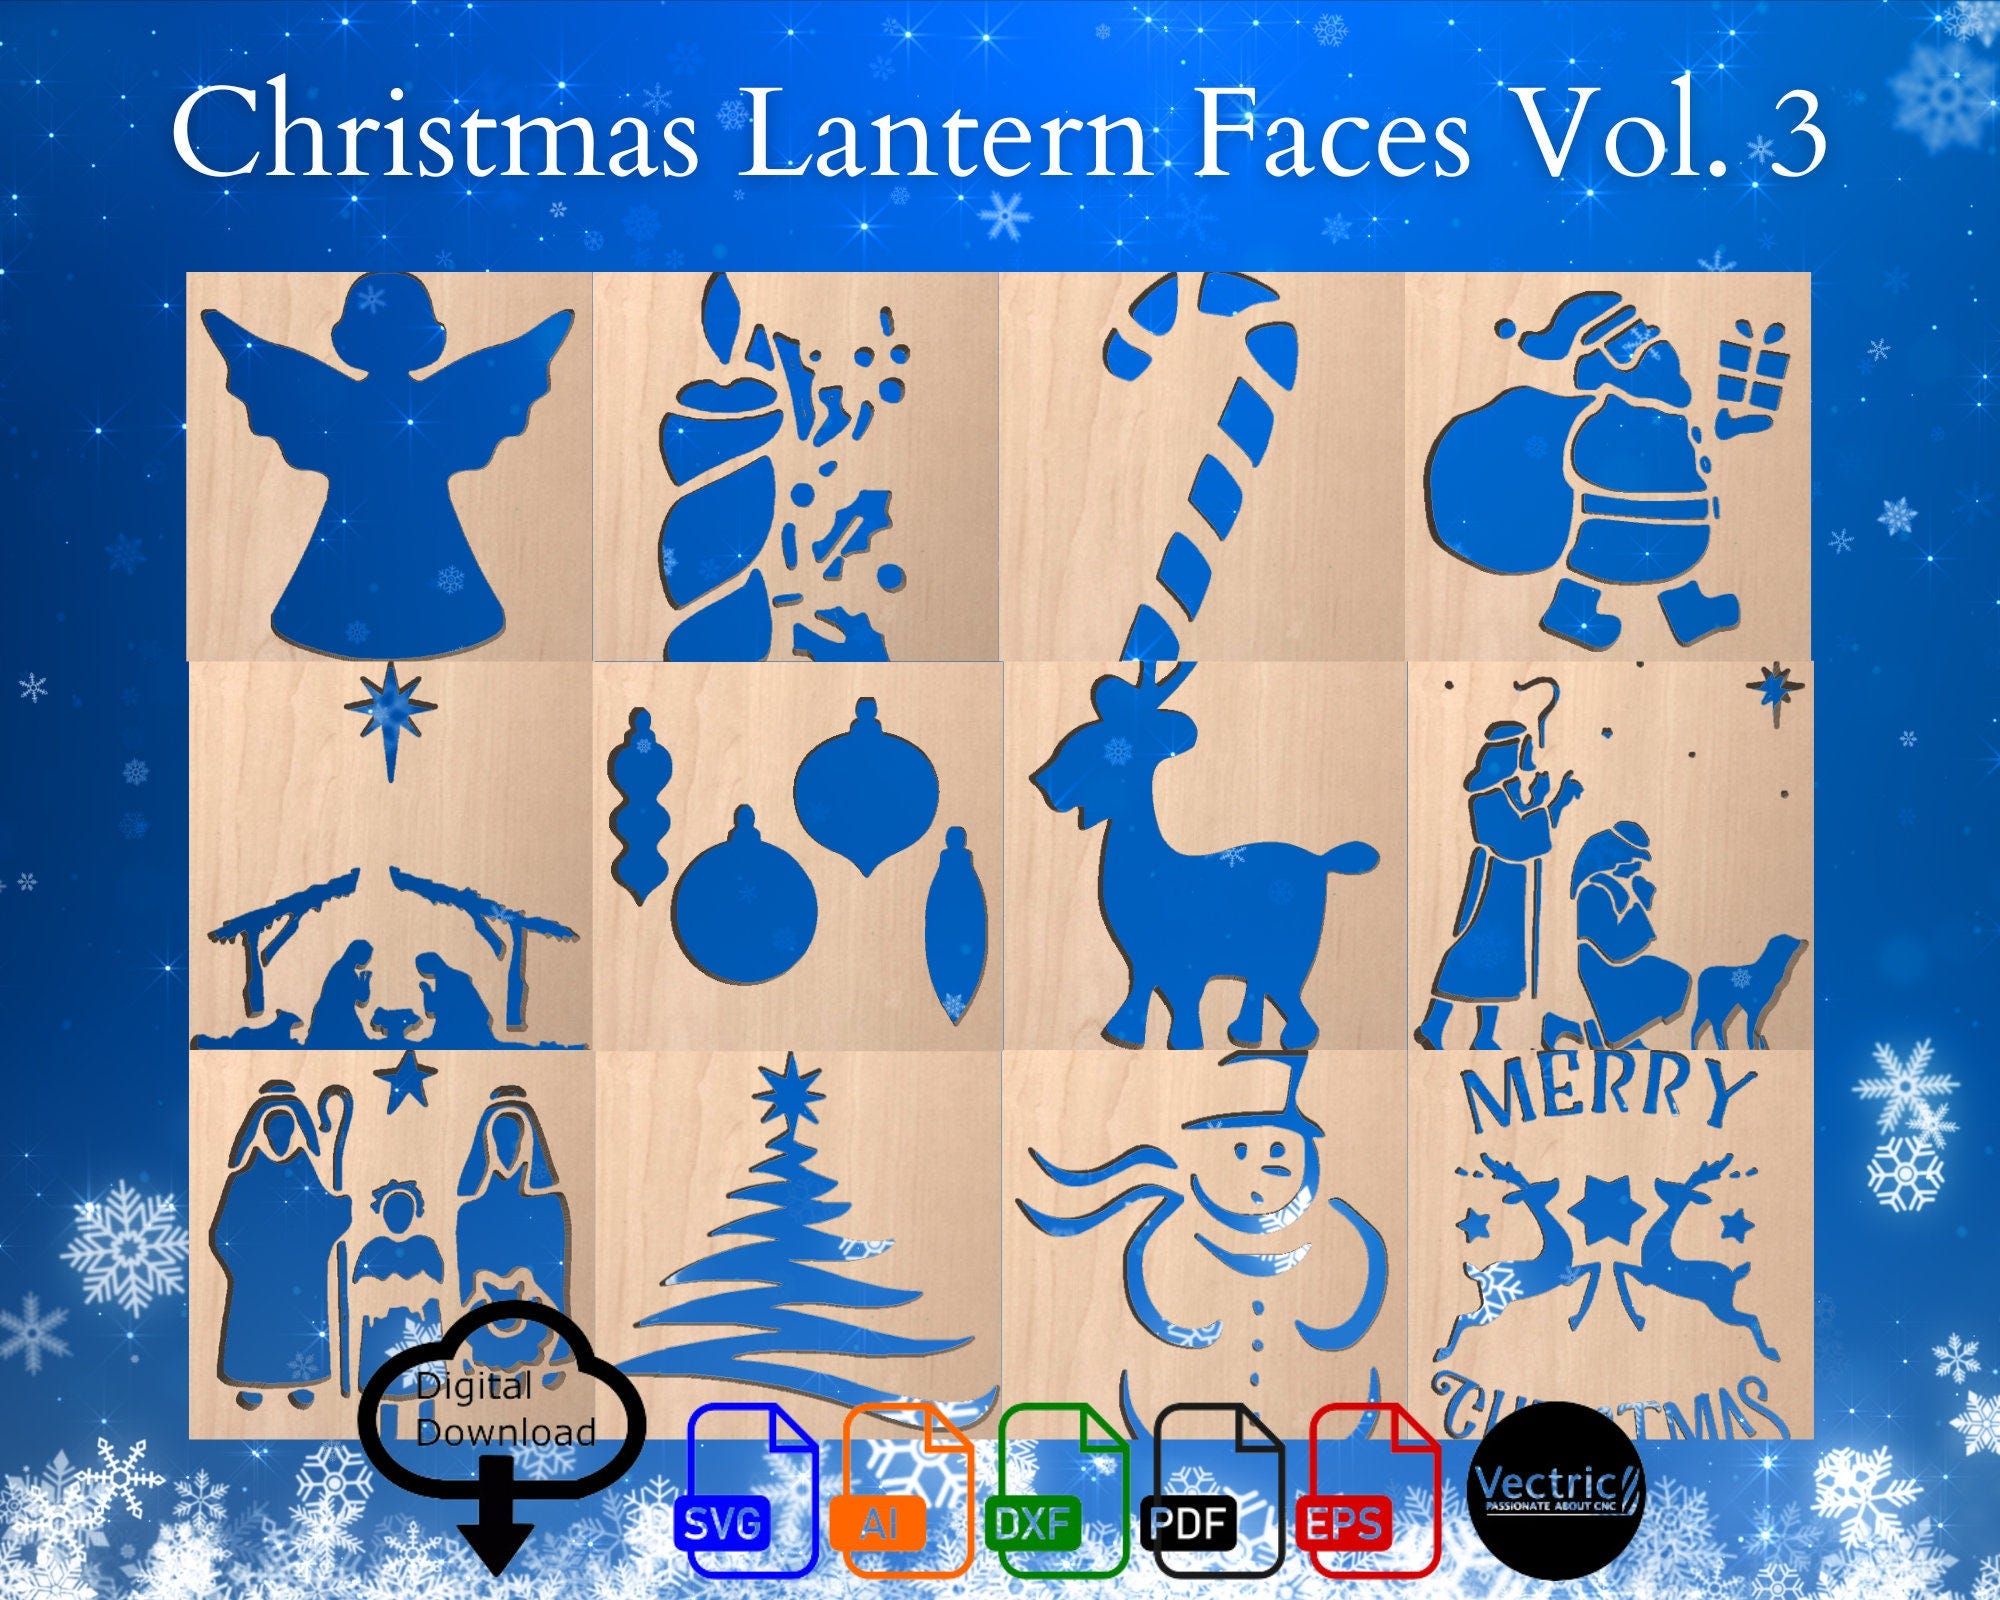 CNC/Laser Christmas Lantern Faces Vol 3 - Twelve Digital download vector files (Svg, AI, Dxf, Eps & Pdf)  and Vectric CRV files